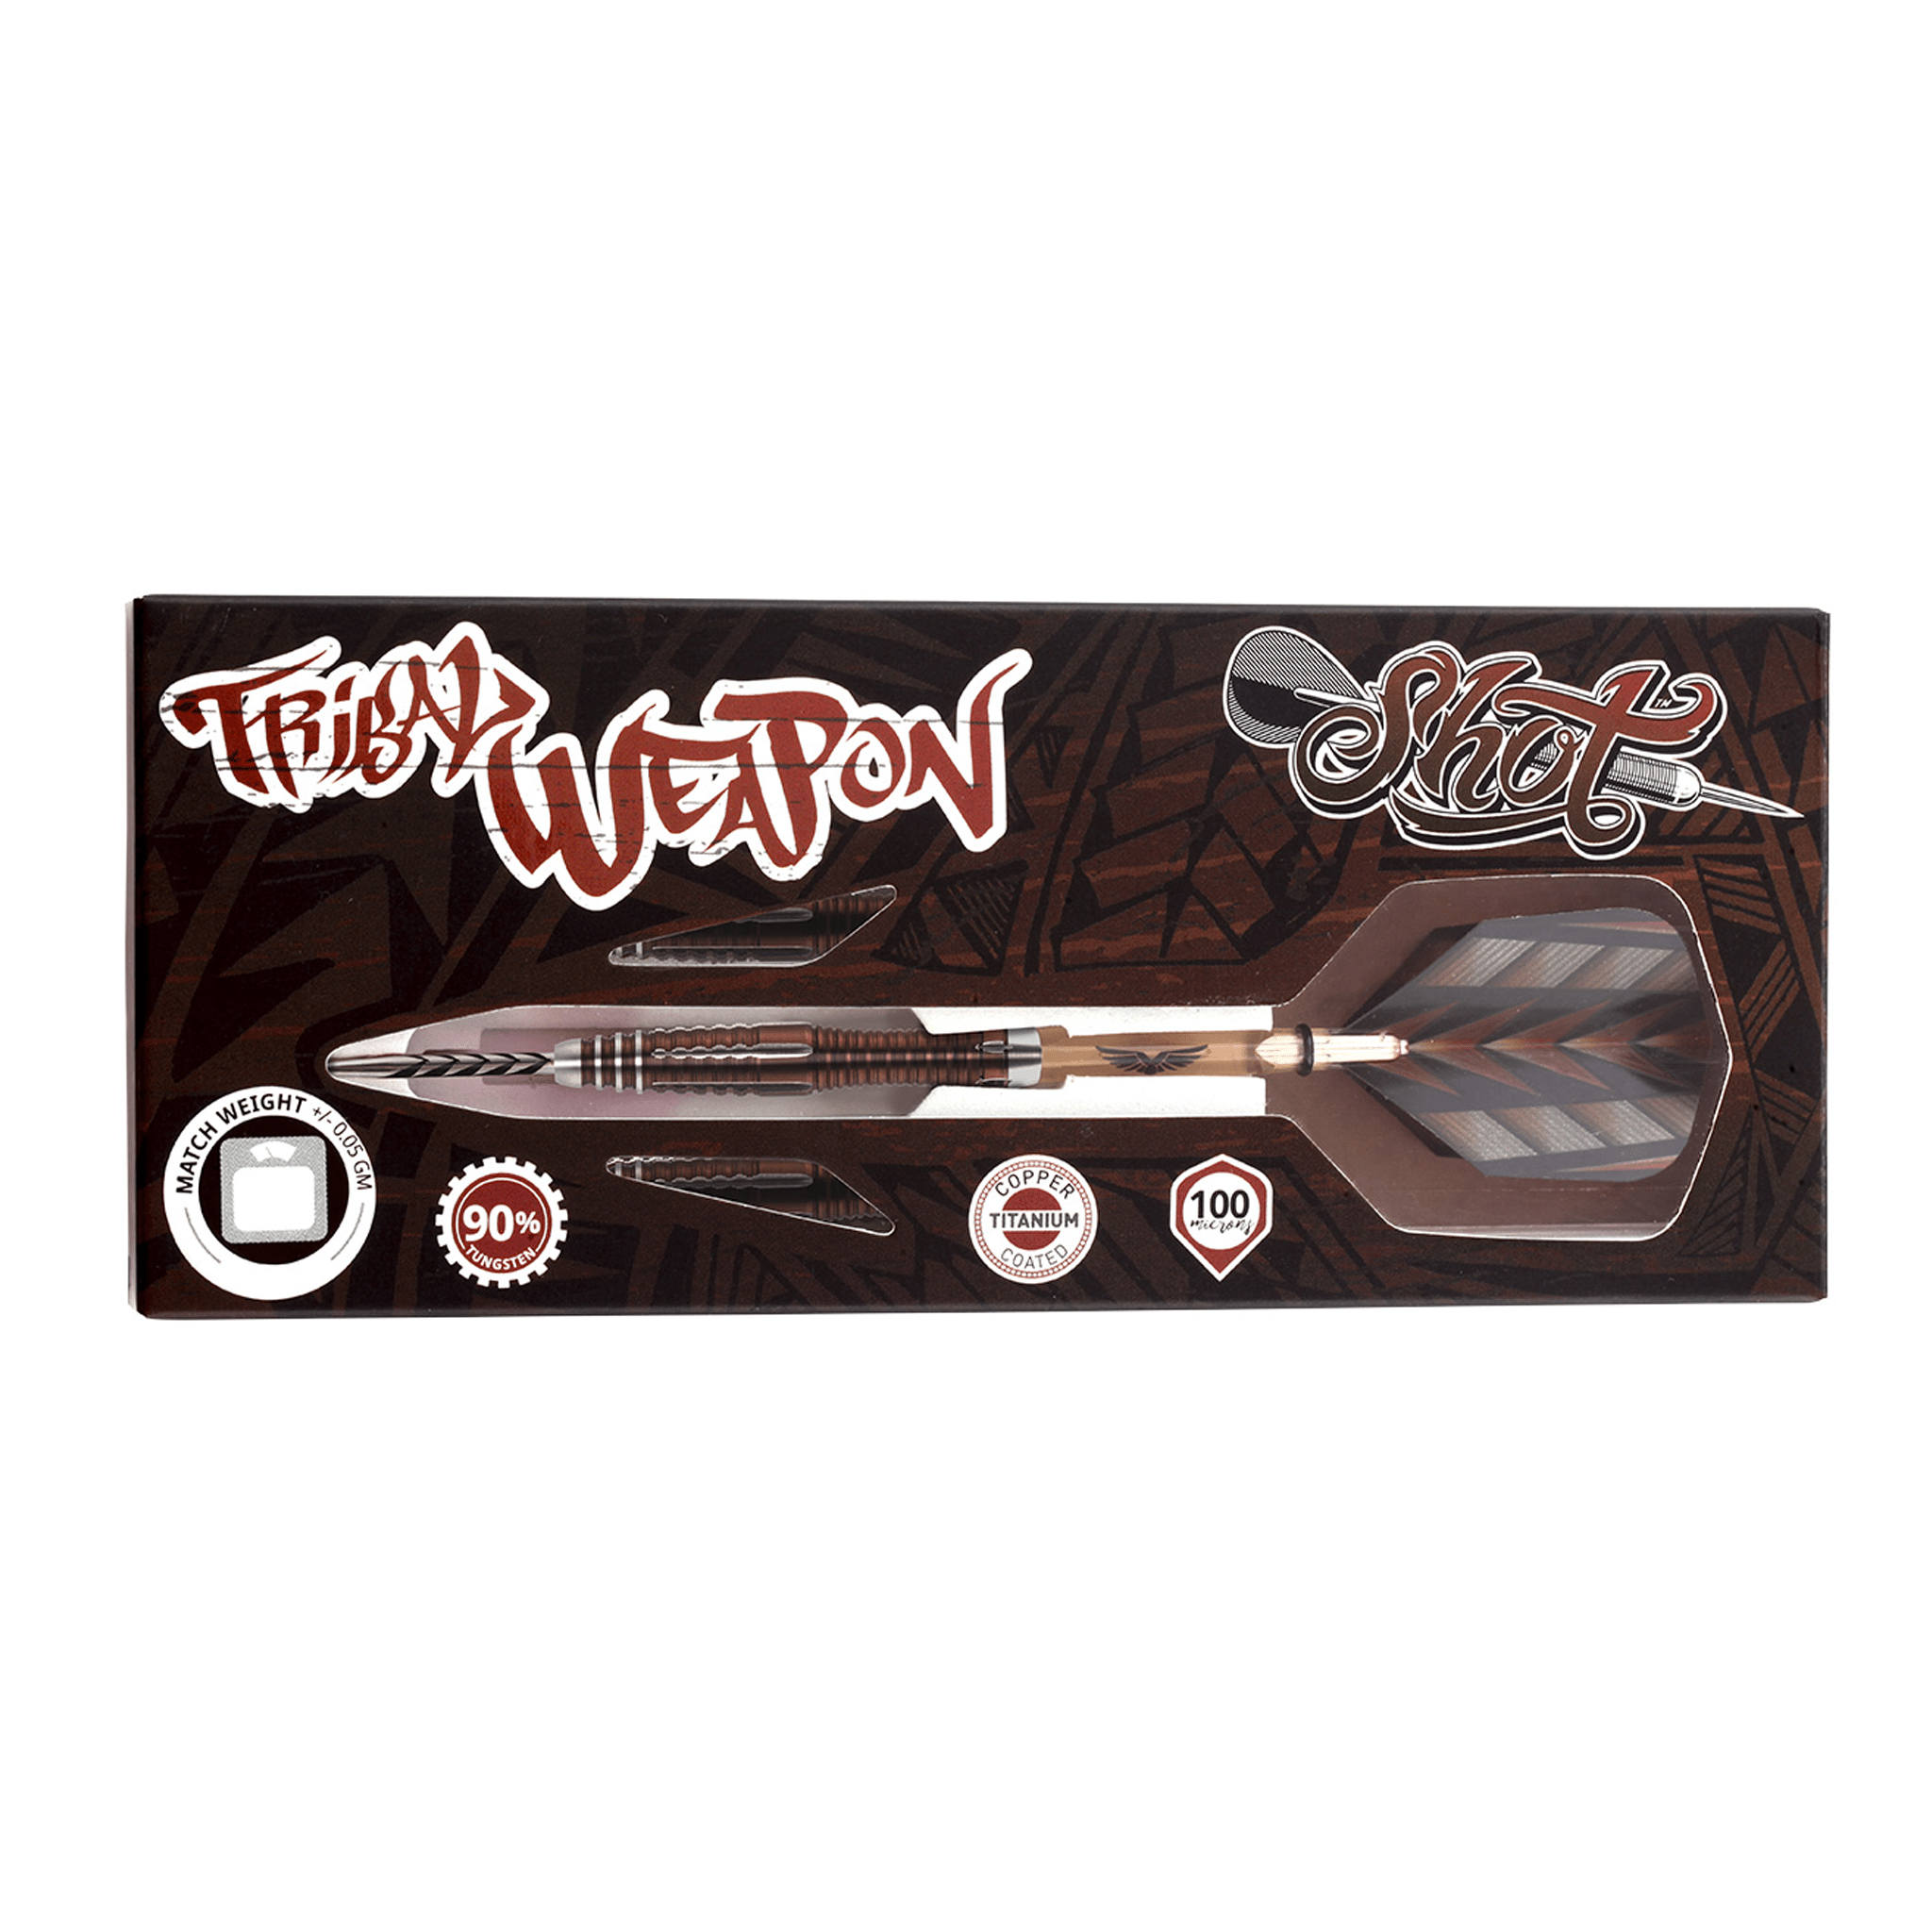 Shot Tribal Weapon 1 Series Steel Tip Darts - 90% Tungsten - 21 Grams Darts